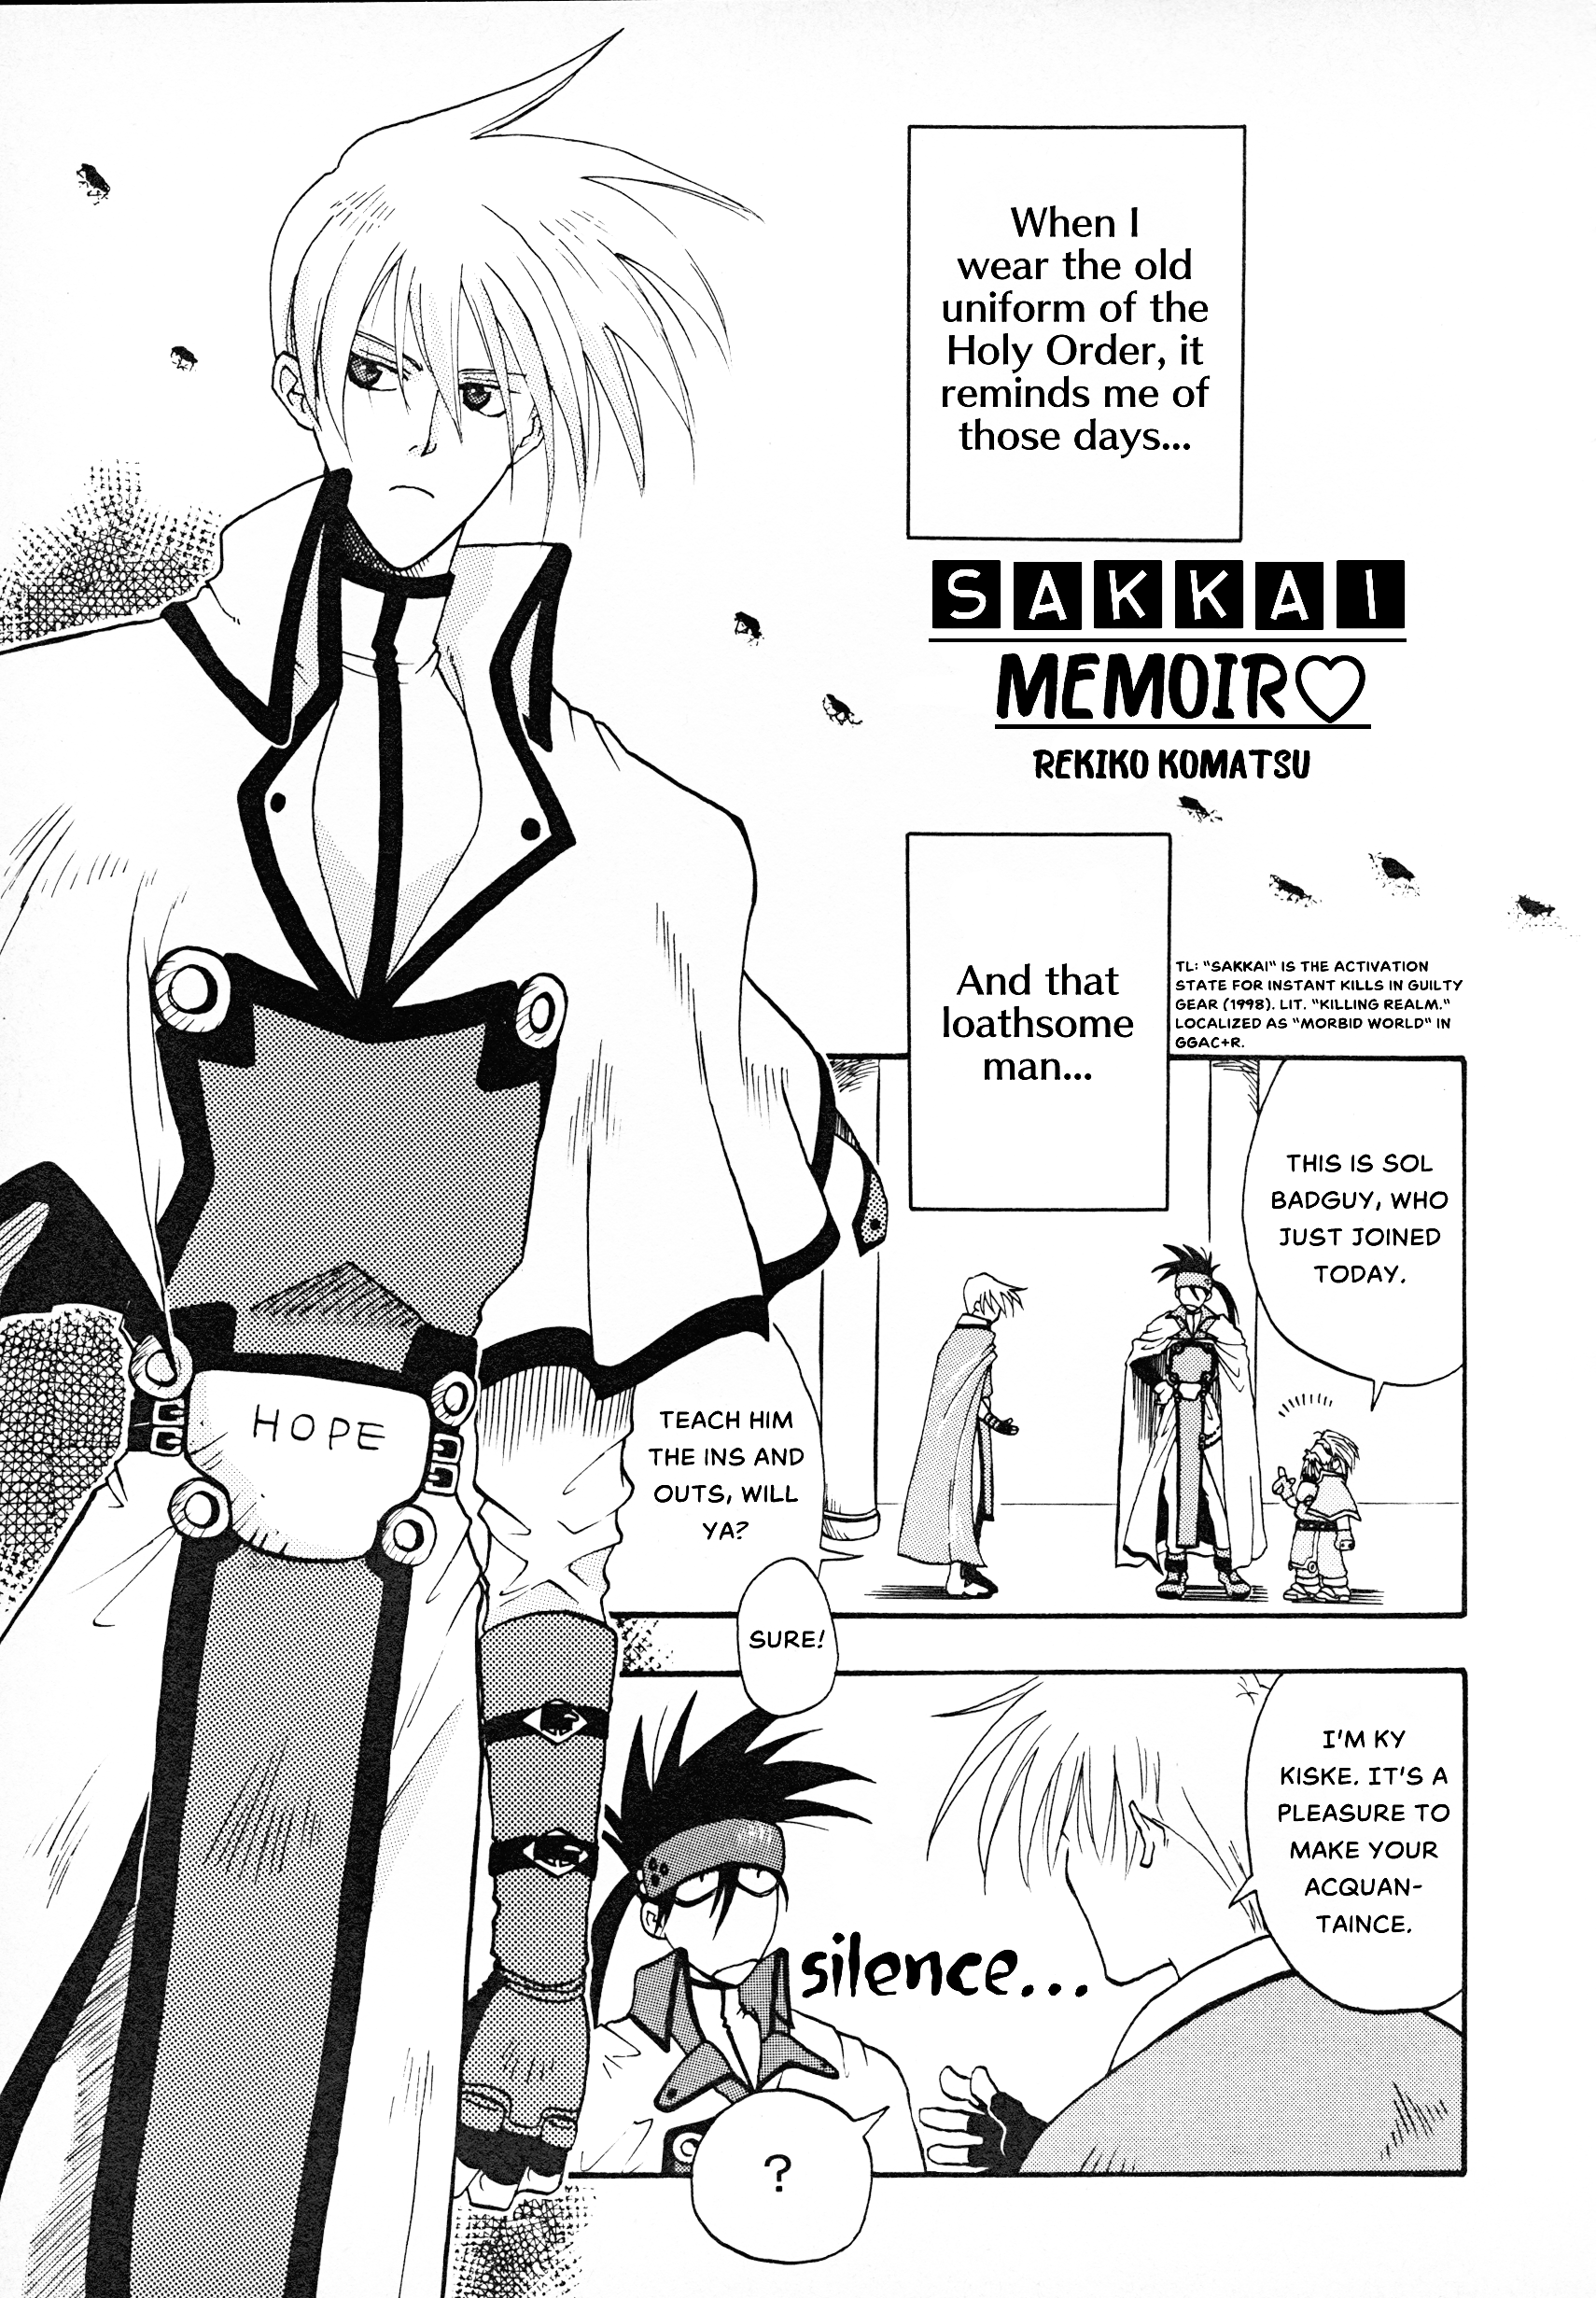 Guilty Gear Comic Anthology Vol.1 Chapter 2: Sakkai Memoir - Picture 1